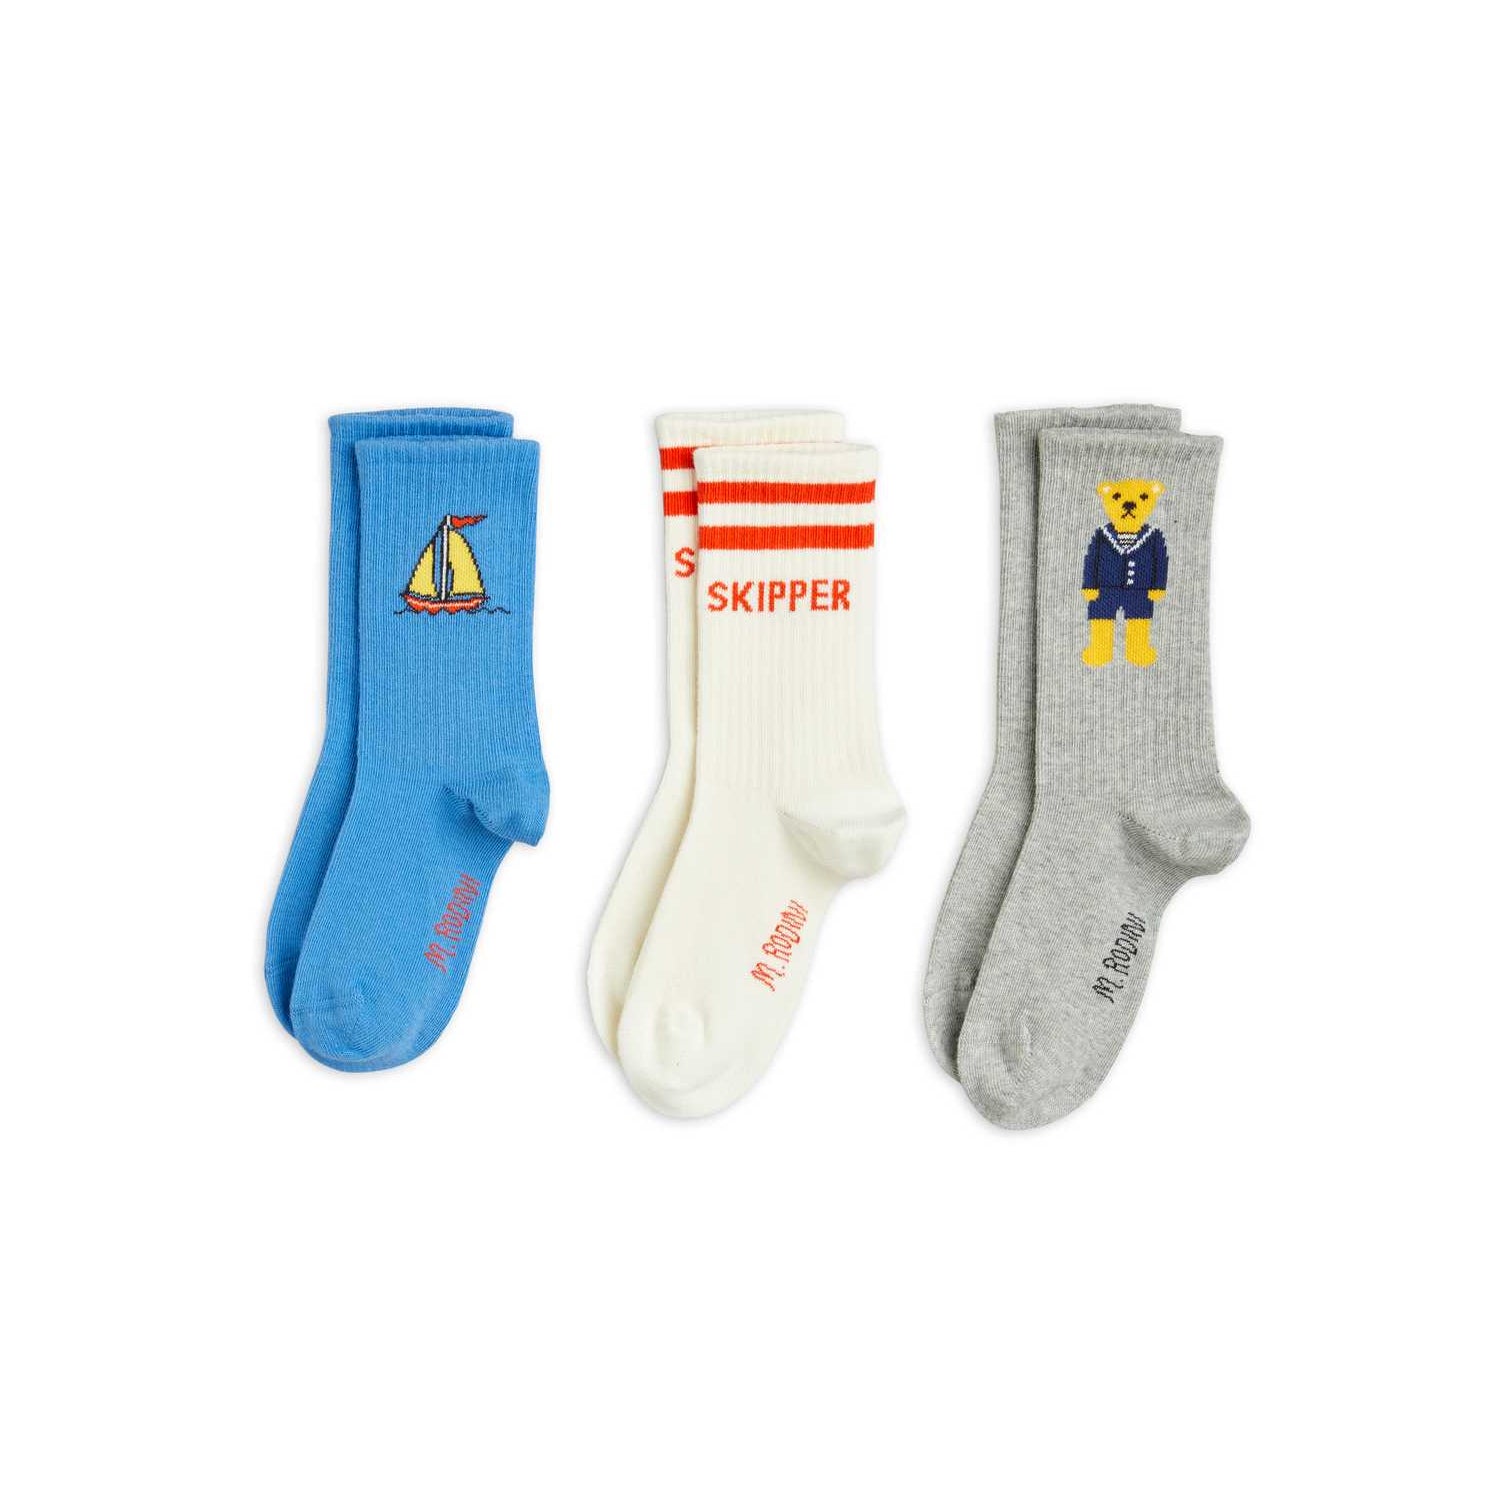 MINI RODINI Skipper Socks 3-Pack ALWAYS SHOW